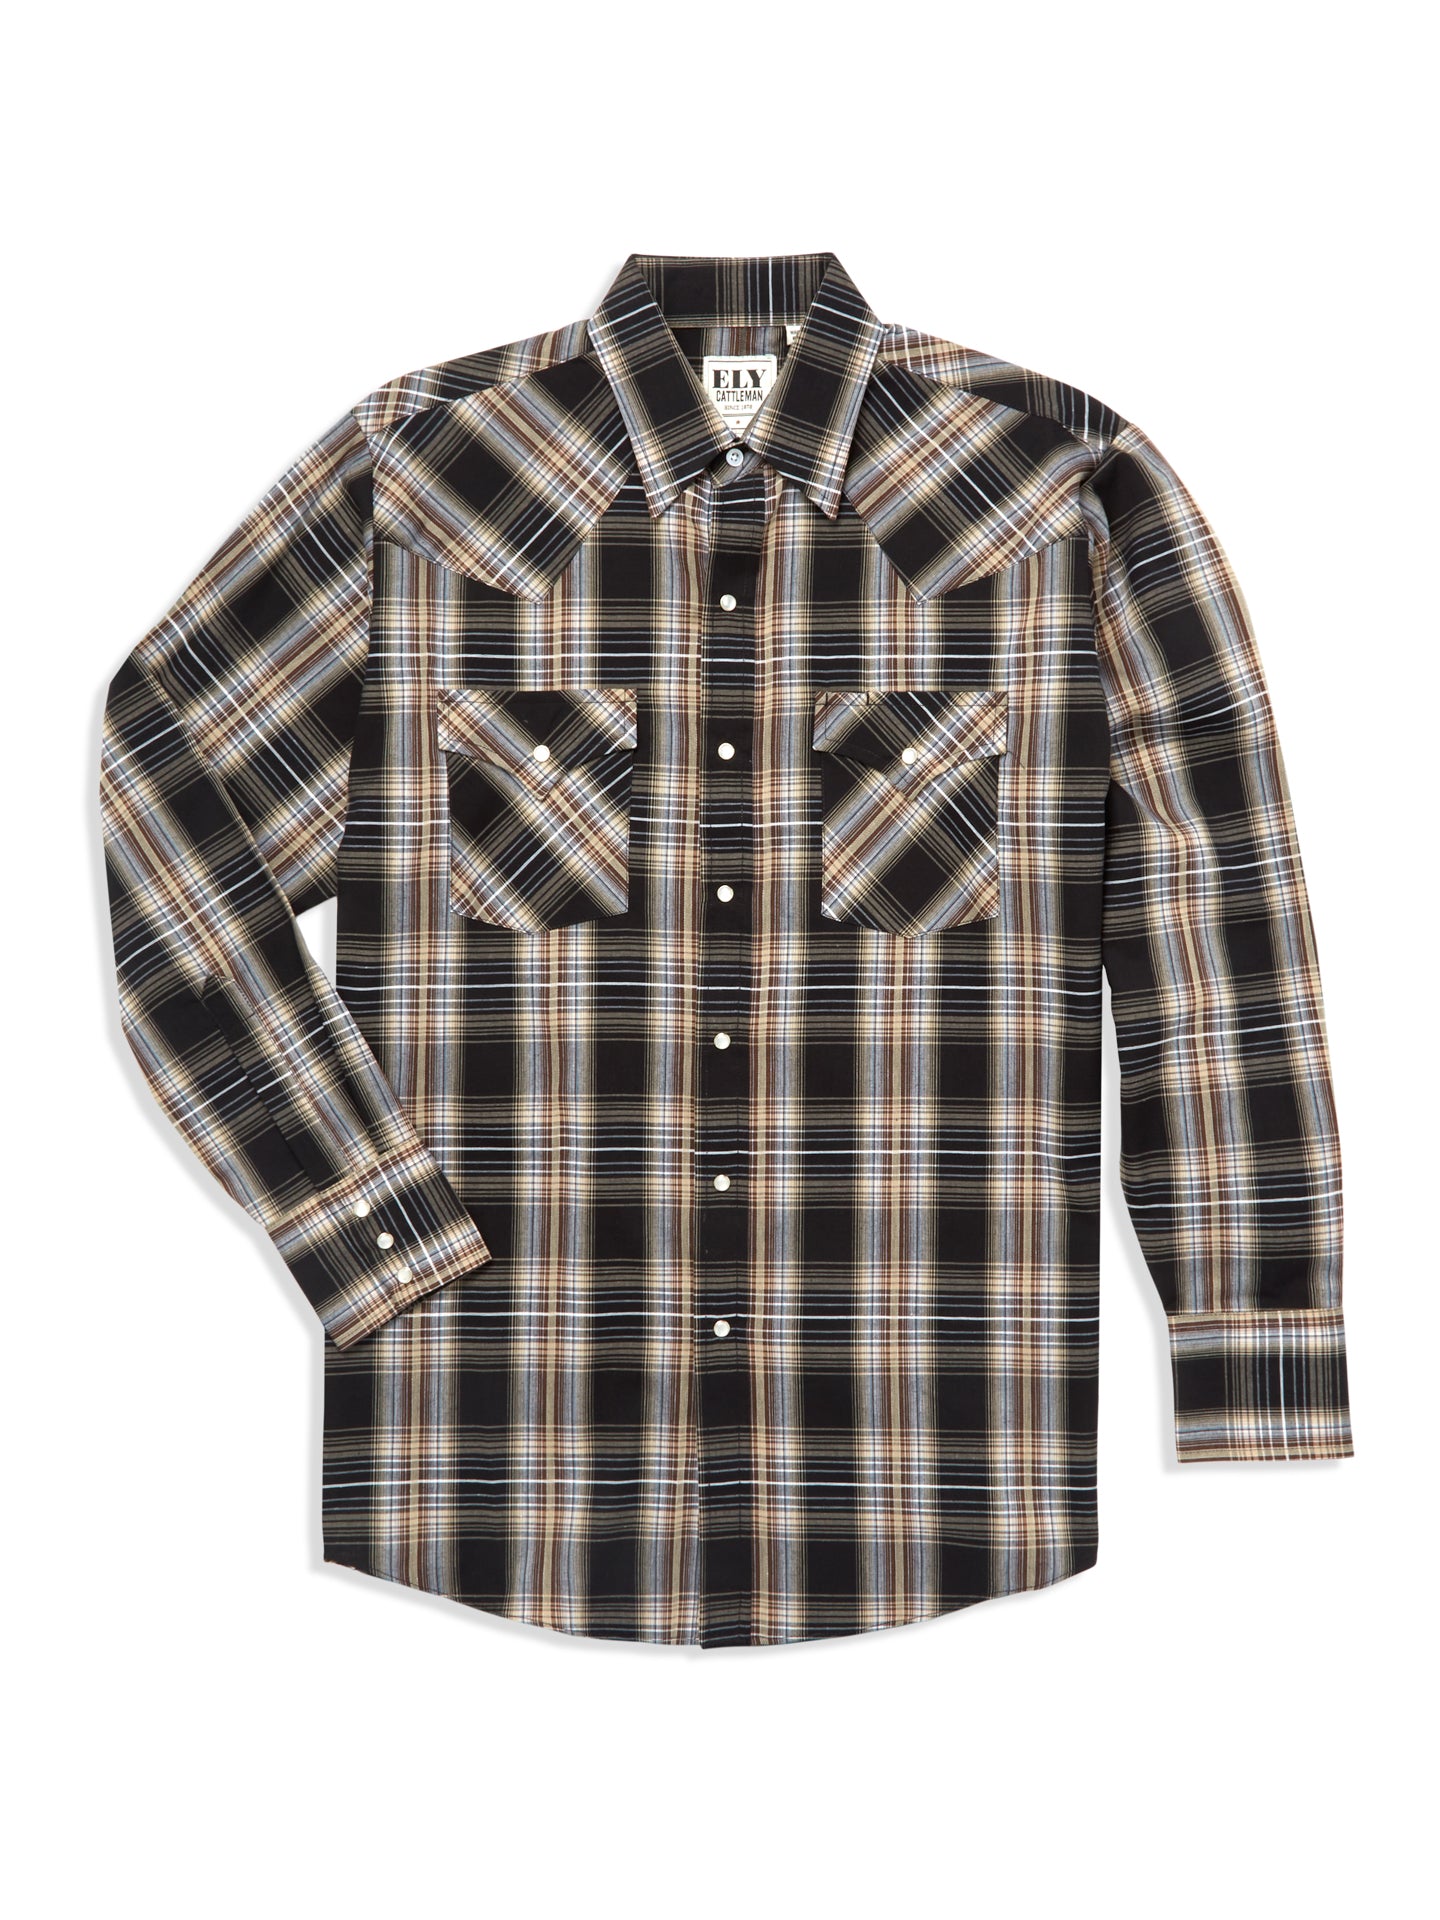 Men's Ely Cattleman Long Sleeve Textured Plaid Western Snap Shirt- Black